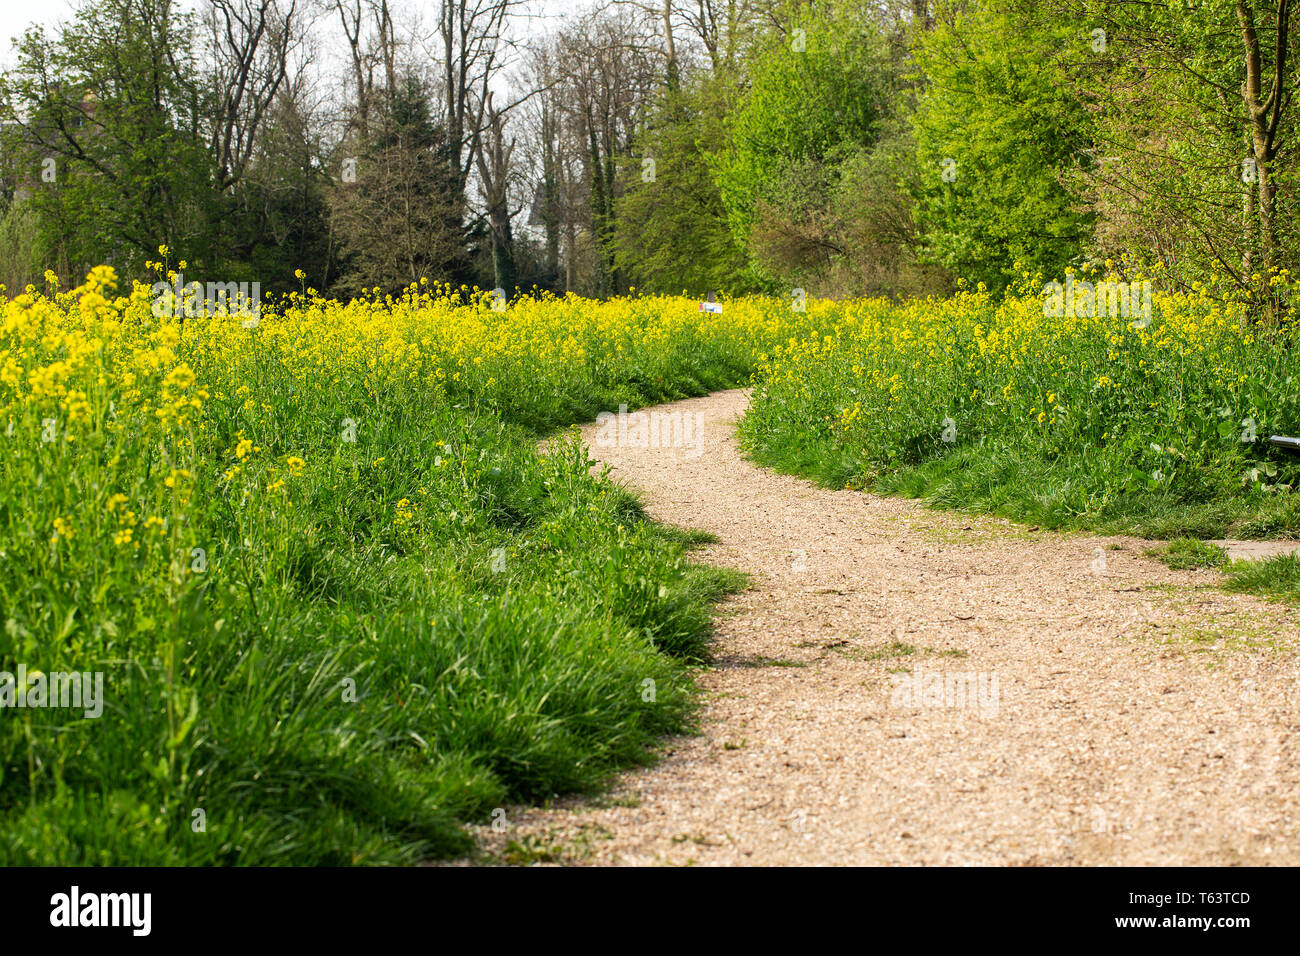 Footpath bordered by Flowering Field Mustard (Brassica rapa) Stock Photo